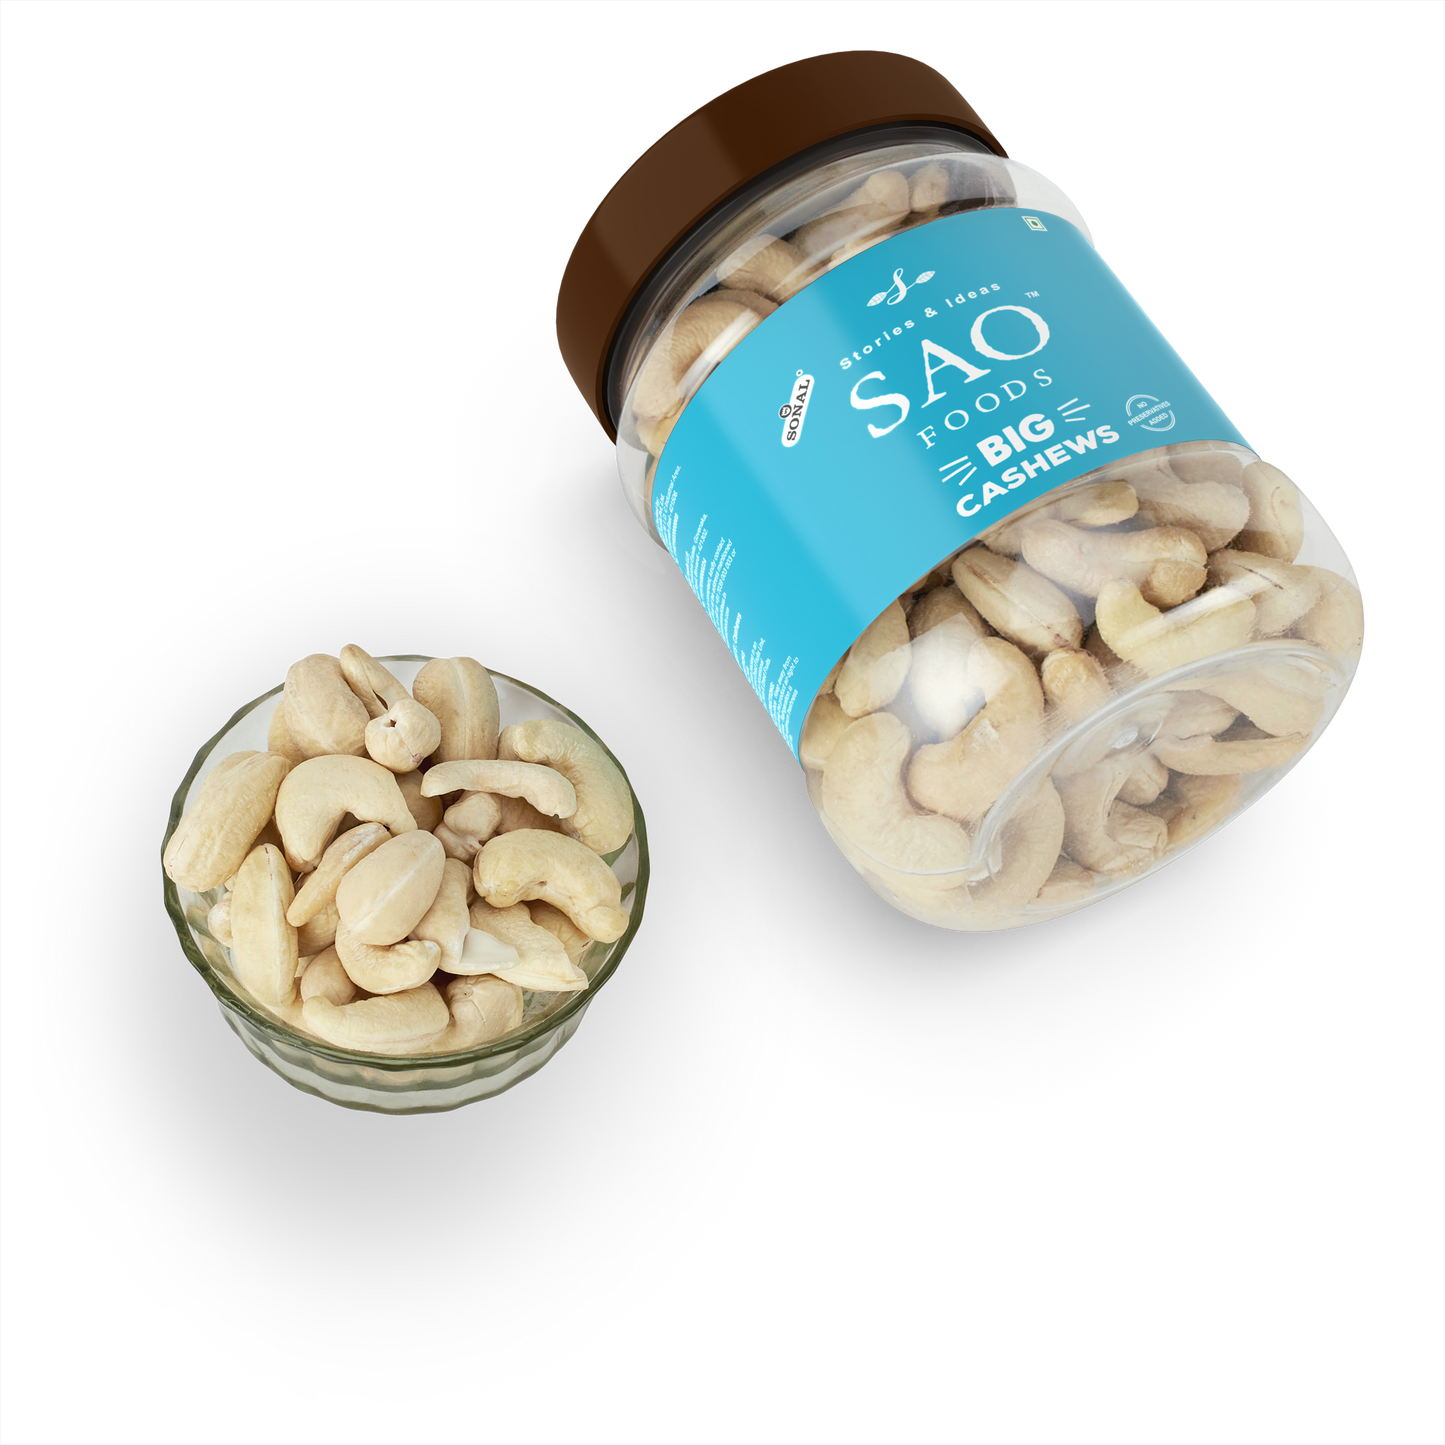 SAO Foods Big Cashews 250 gm